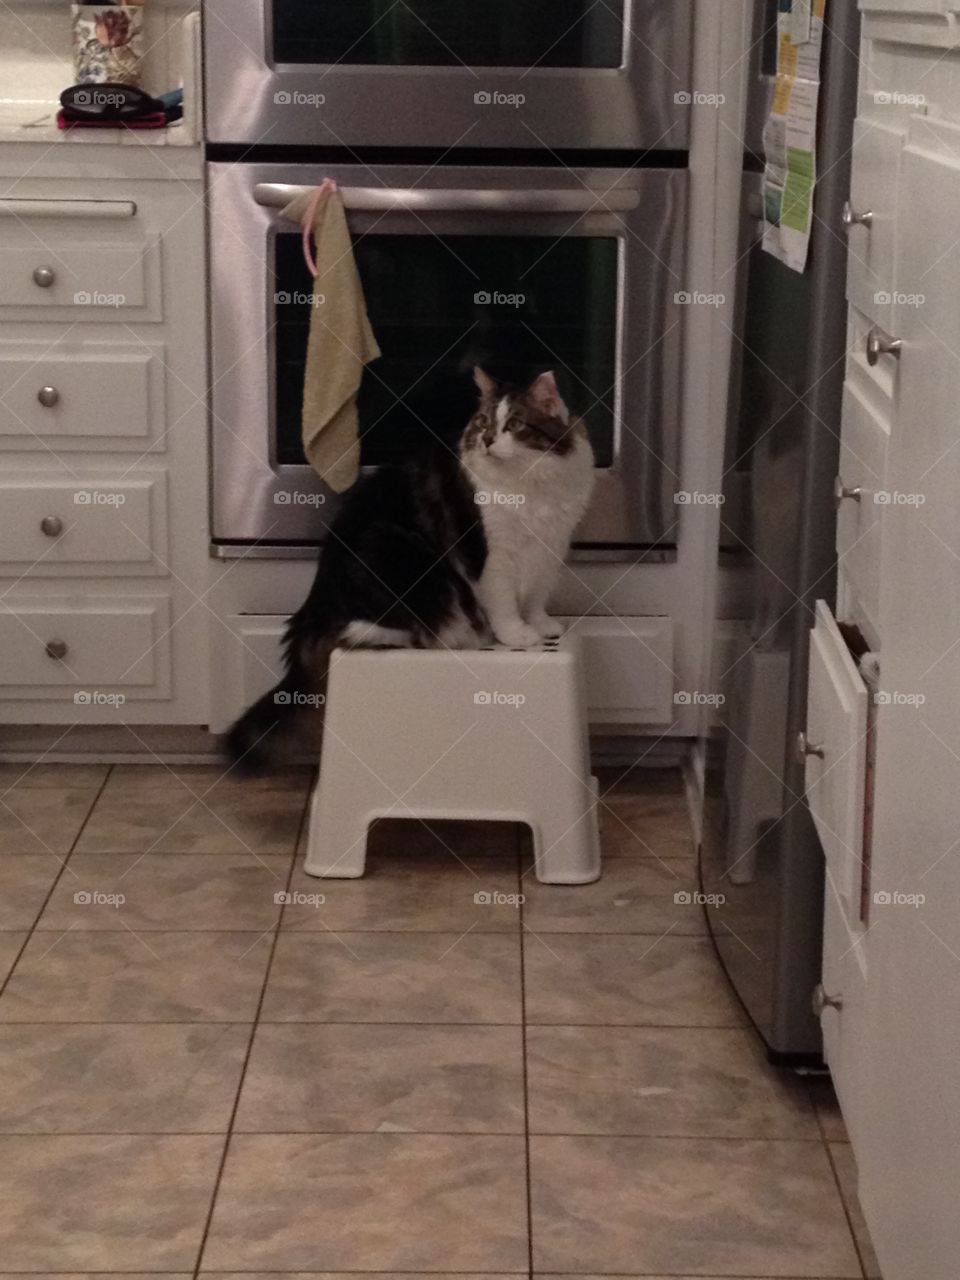 Cat on Stool. Cute cat on stool